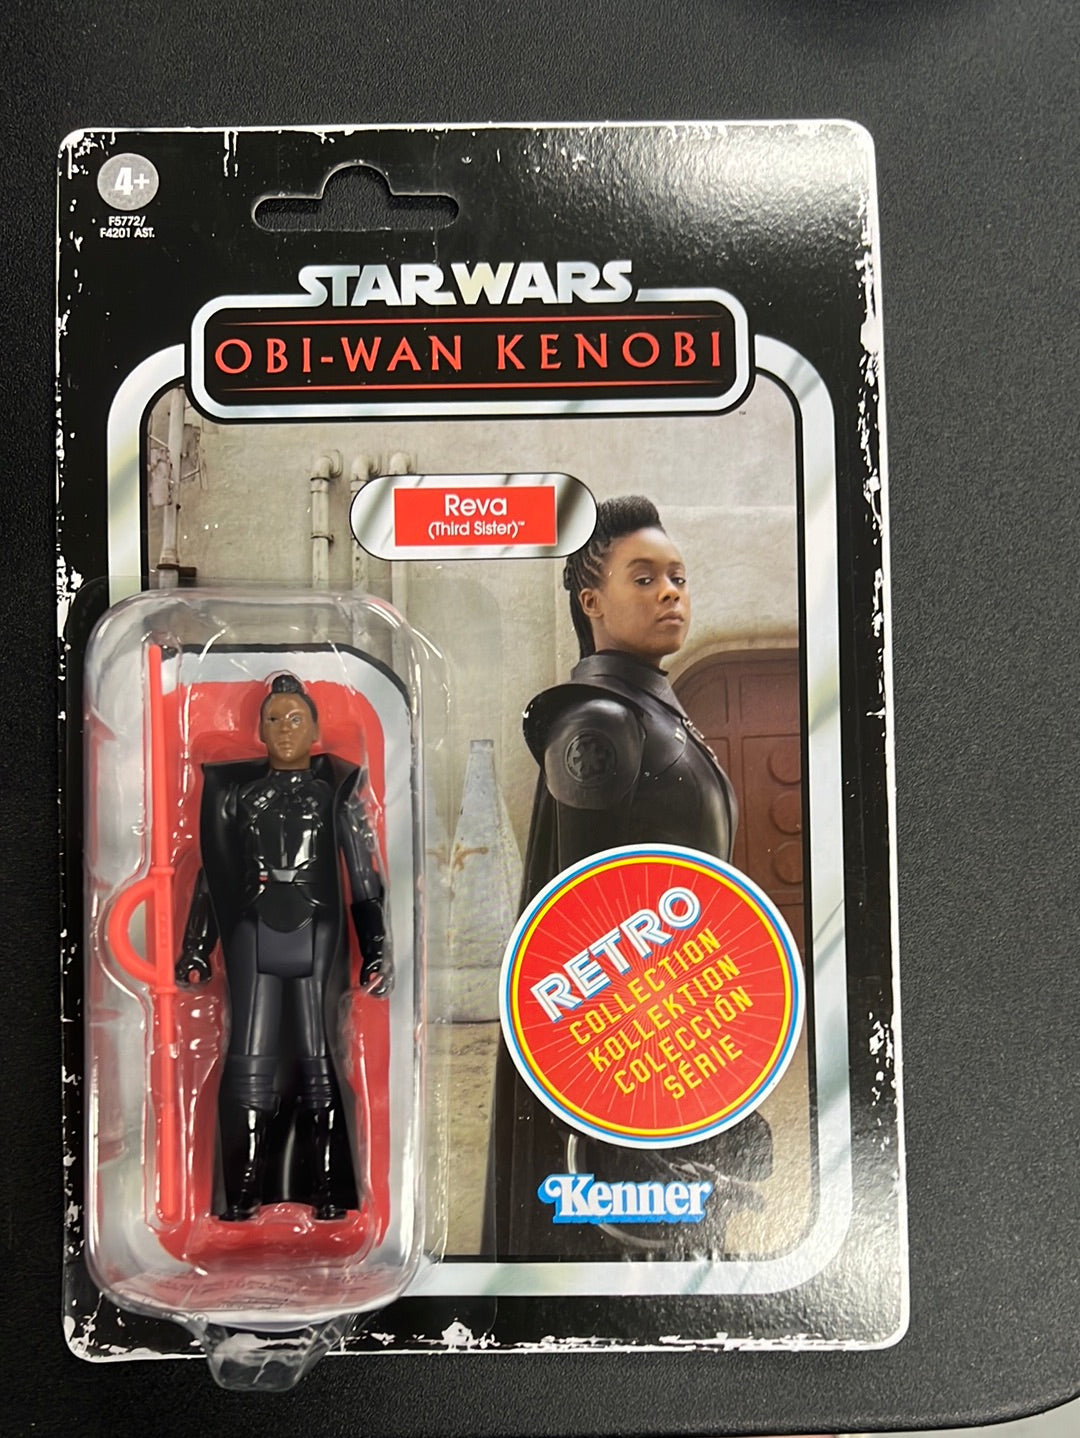 Star Wars Obi-Wan Kenobi Reva Third Sister Retro Kenner 3.75" Action Figure